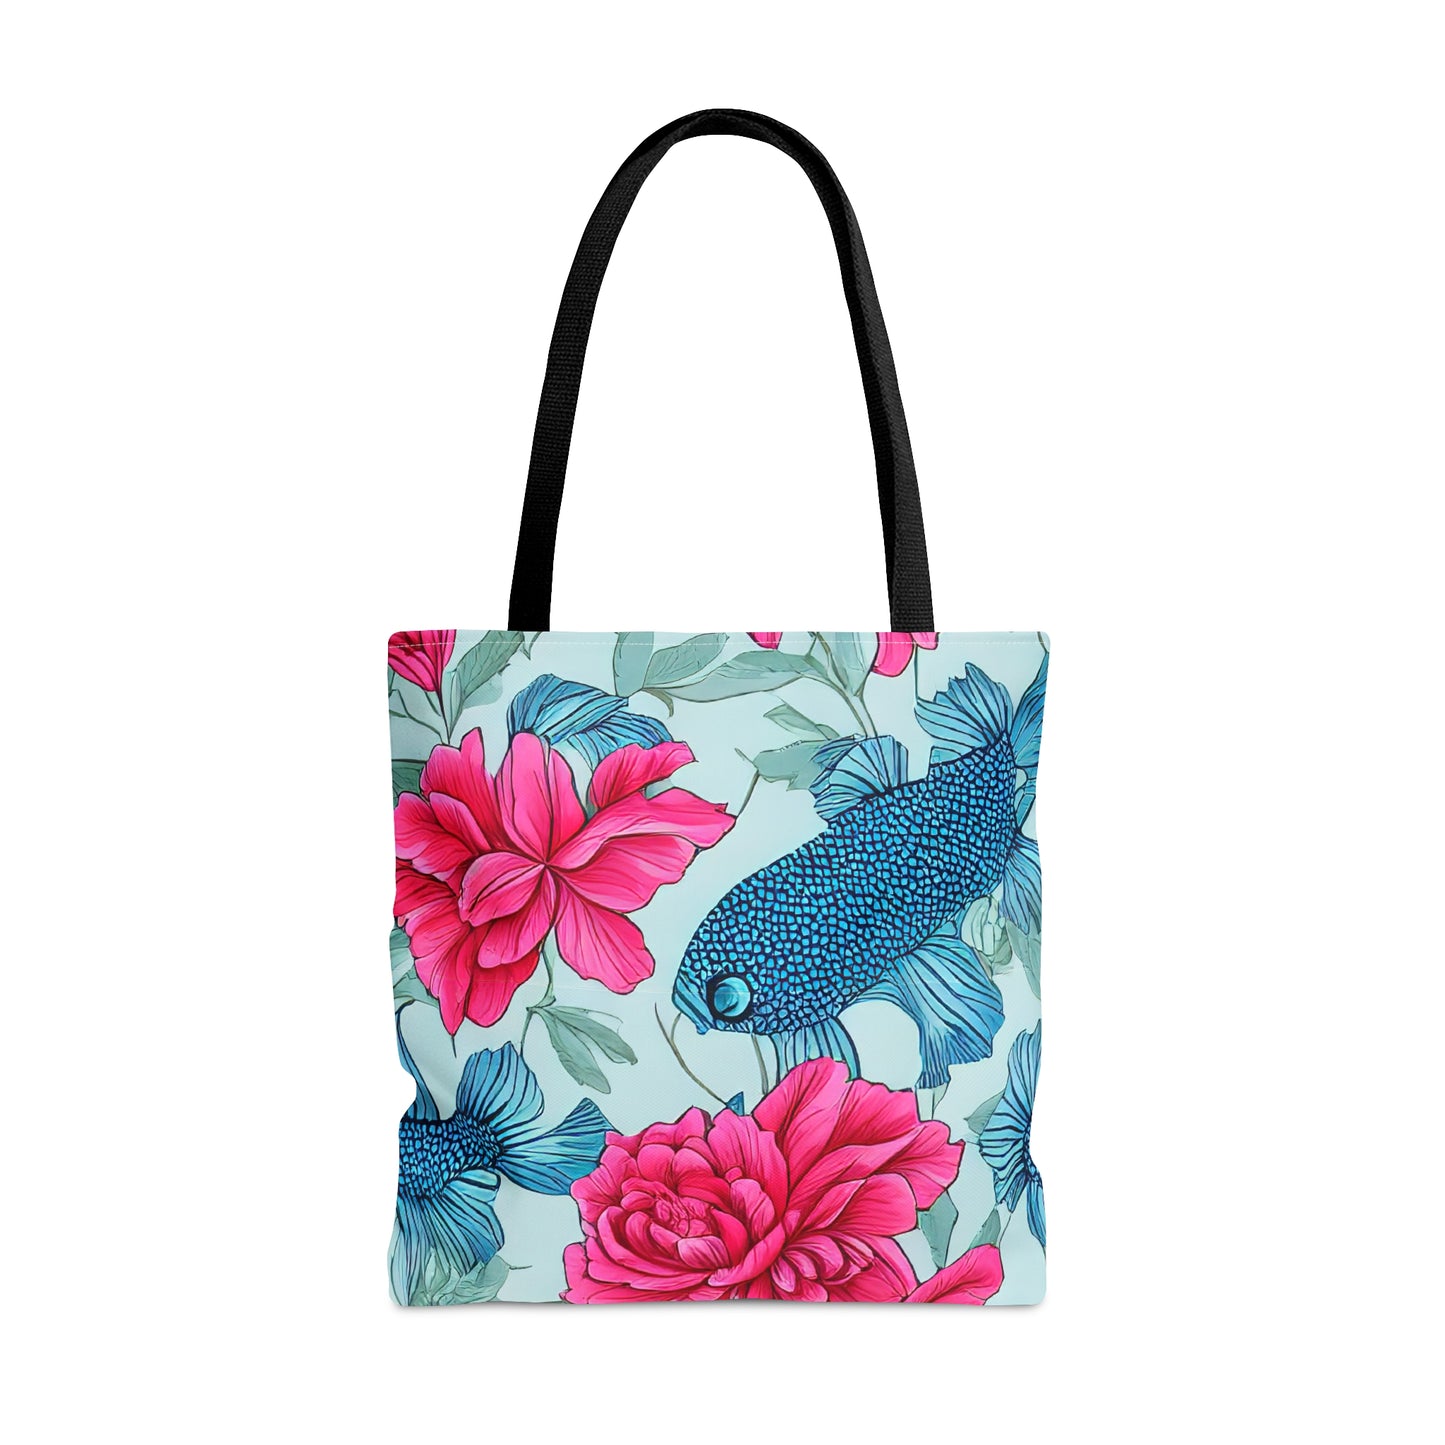 Watery Floral Tote Bag